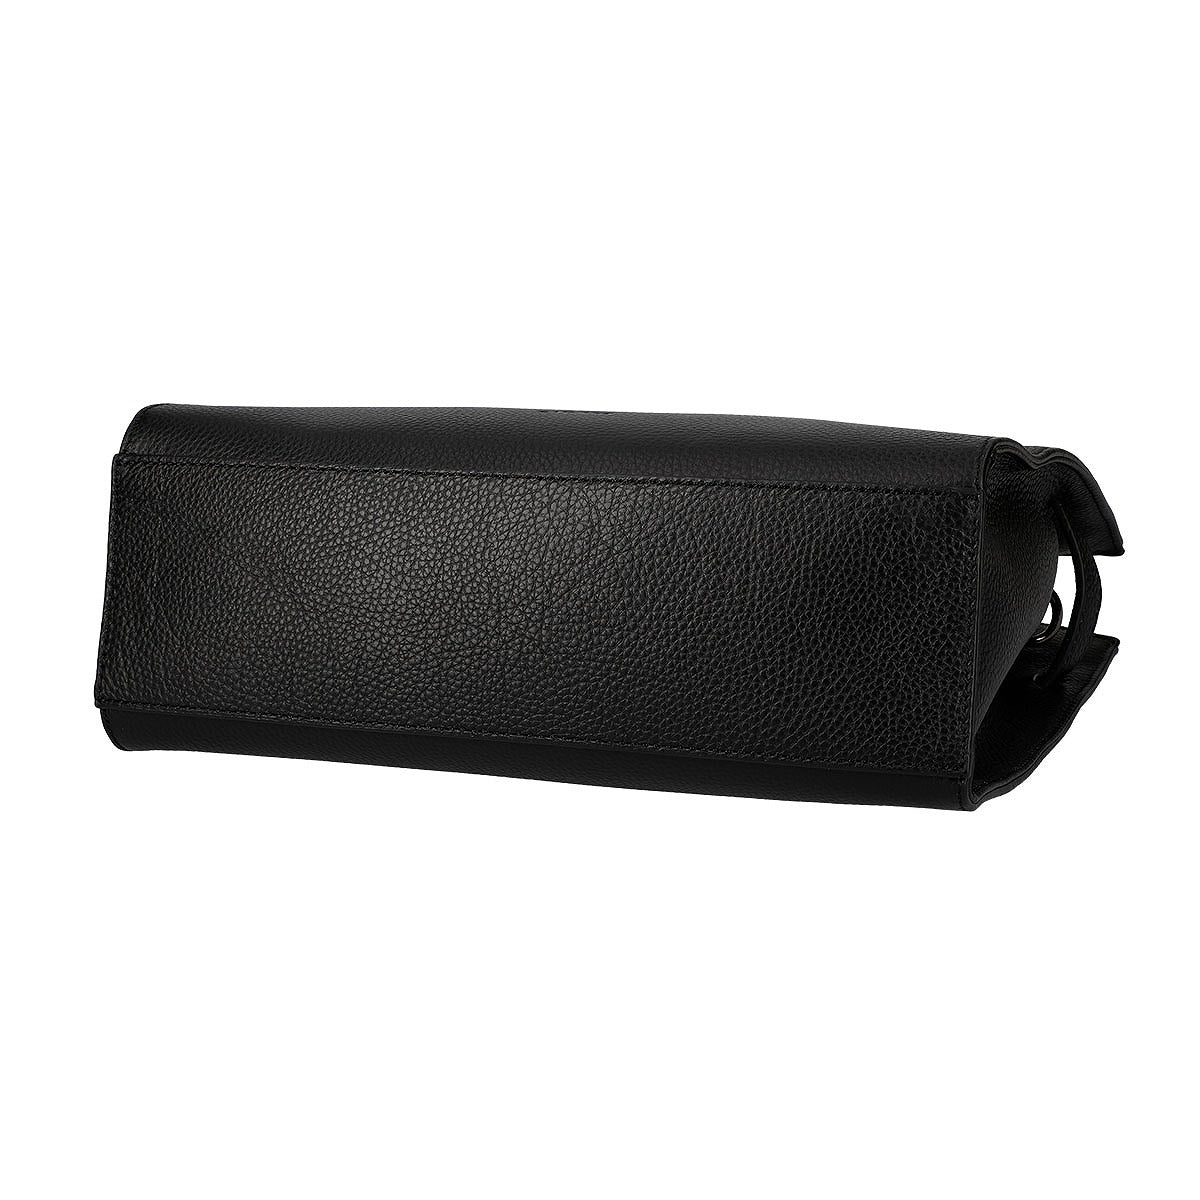 2 Way Leather Handbag with Outer Belt Design